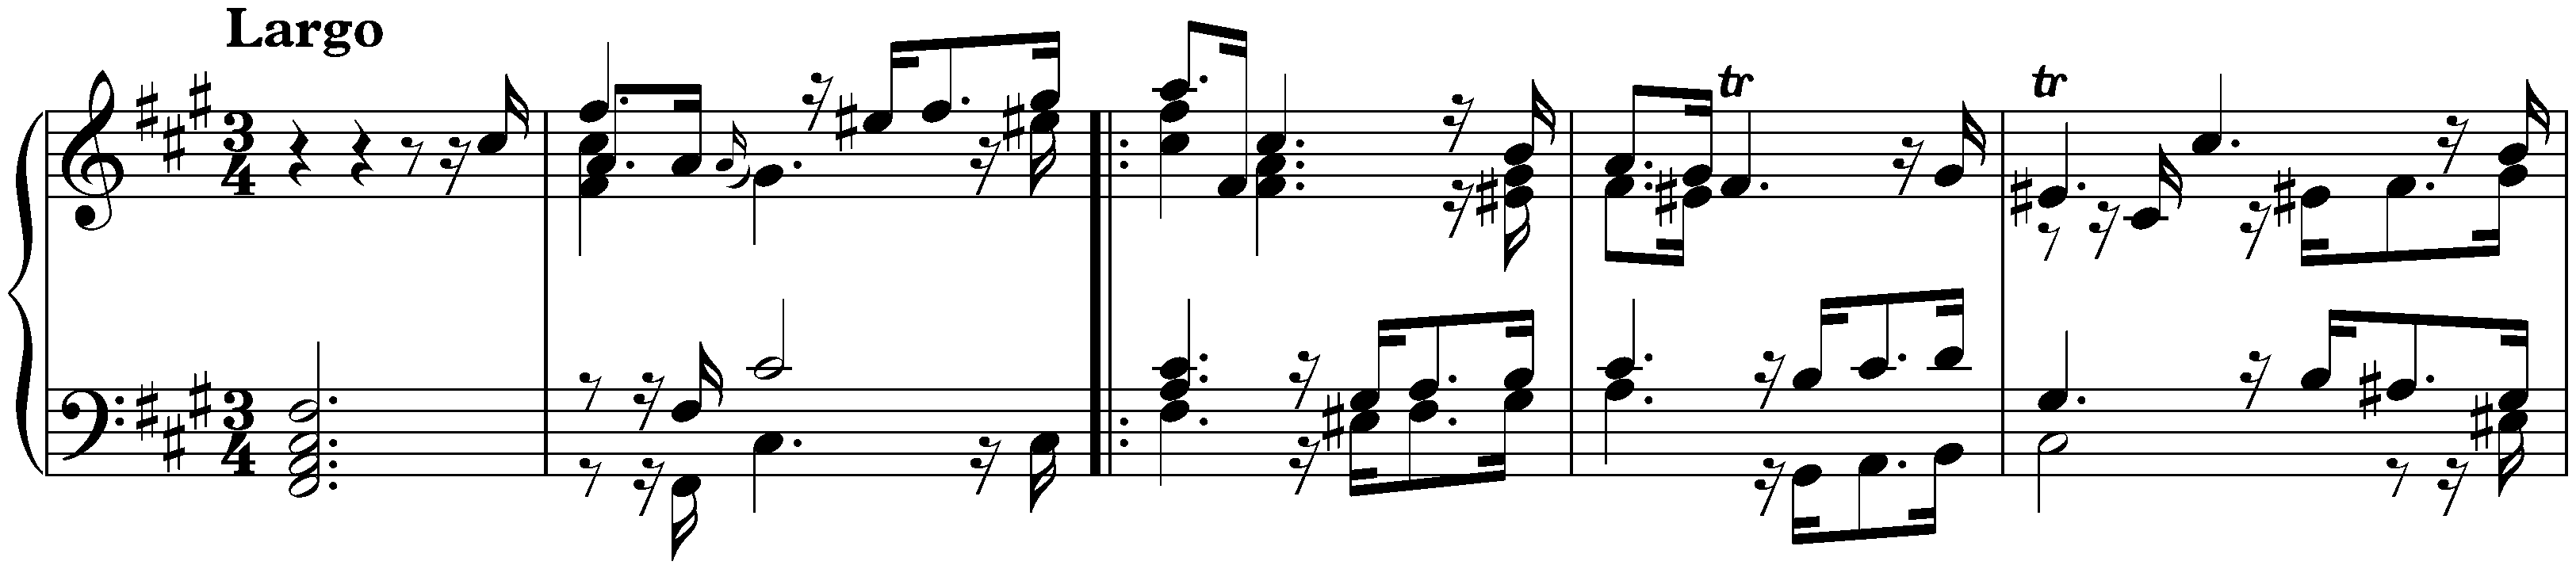 Suite in F-sharp minor, HWV 431; 2. Largo